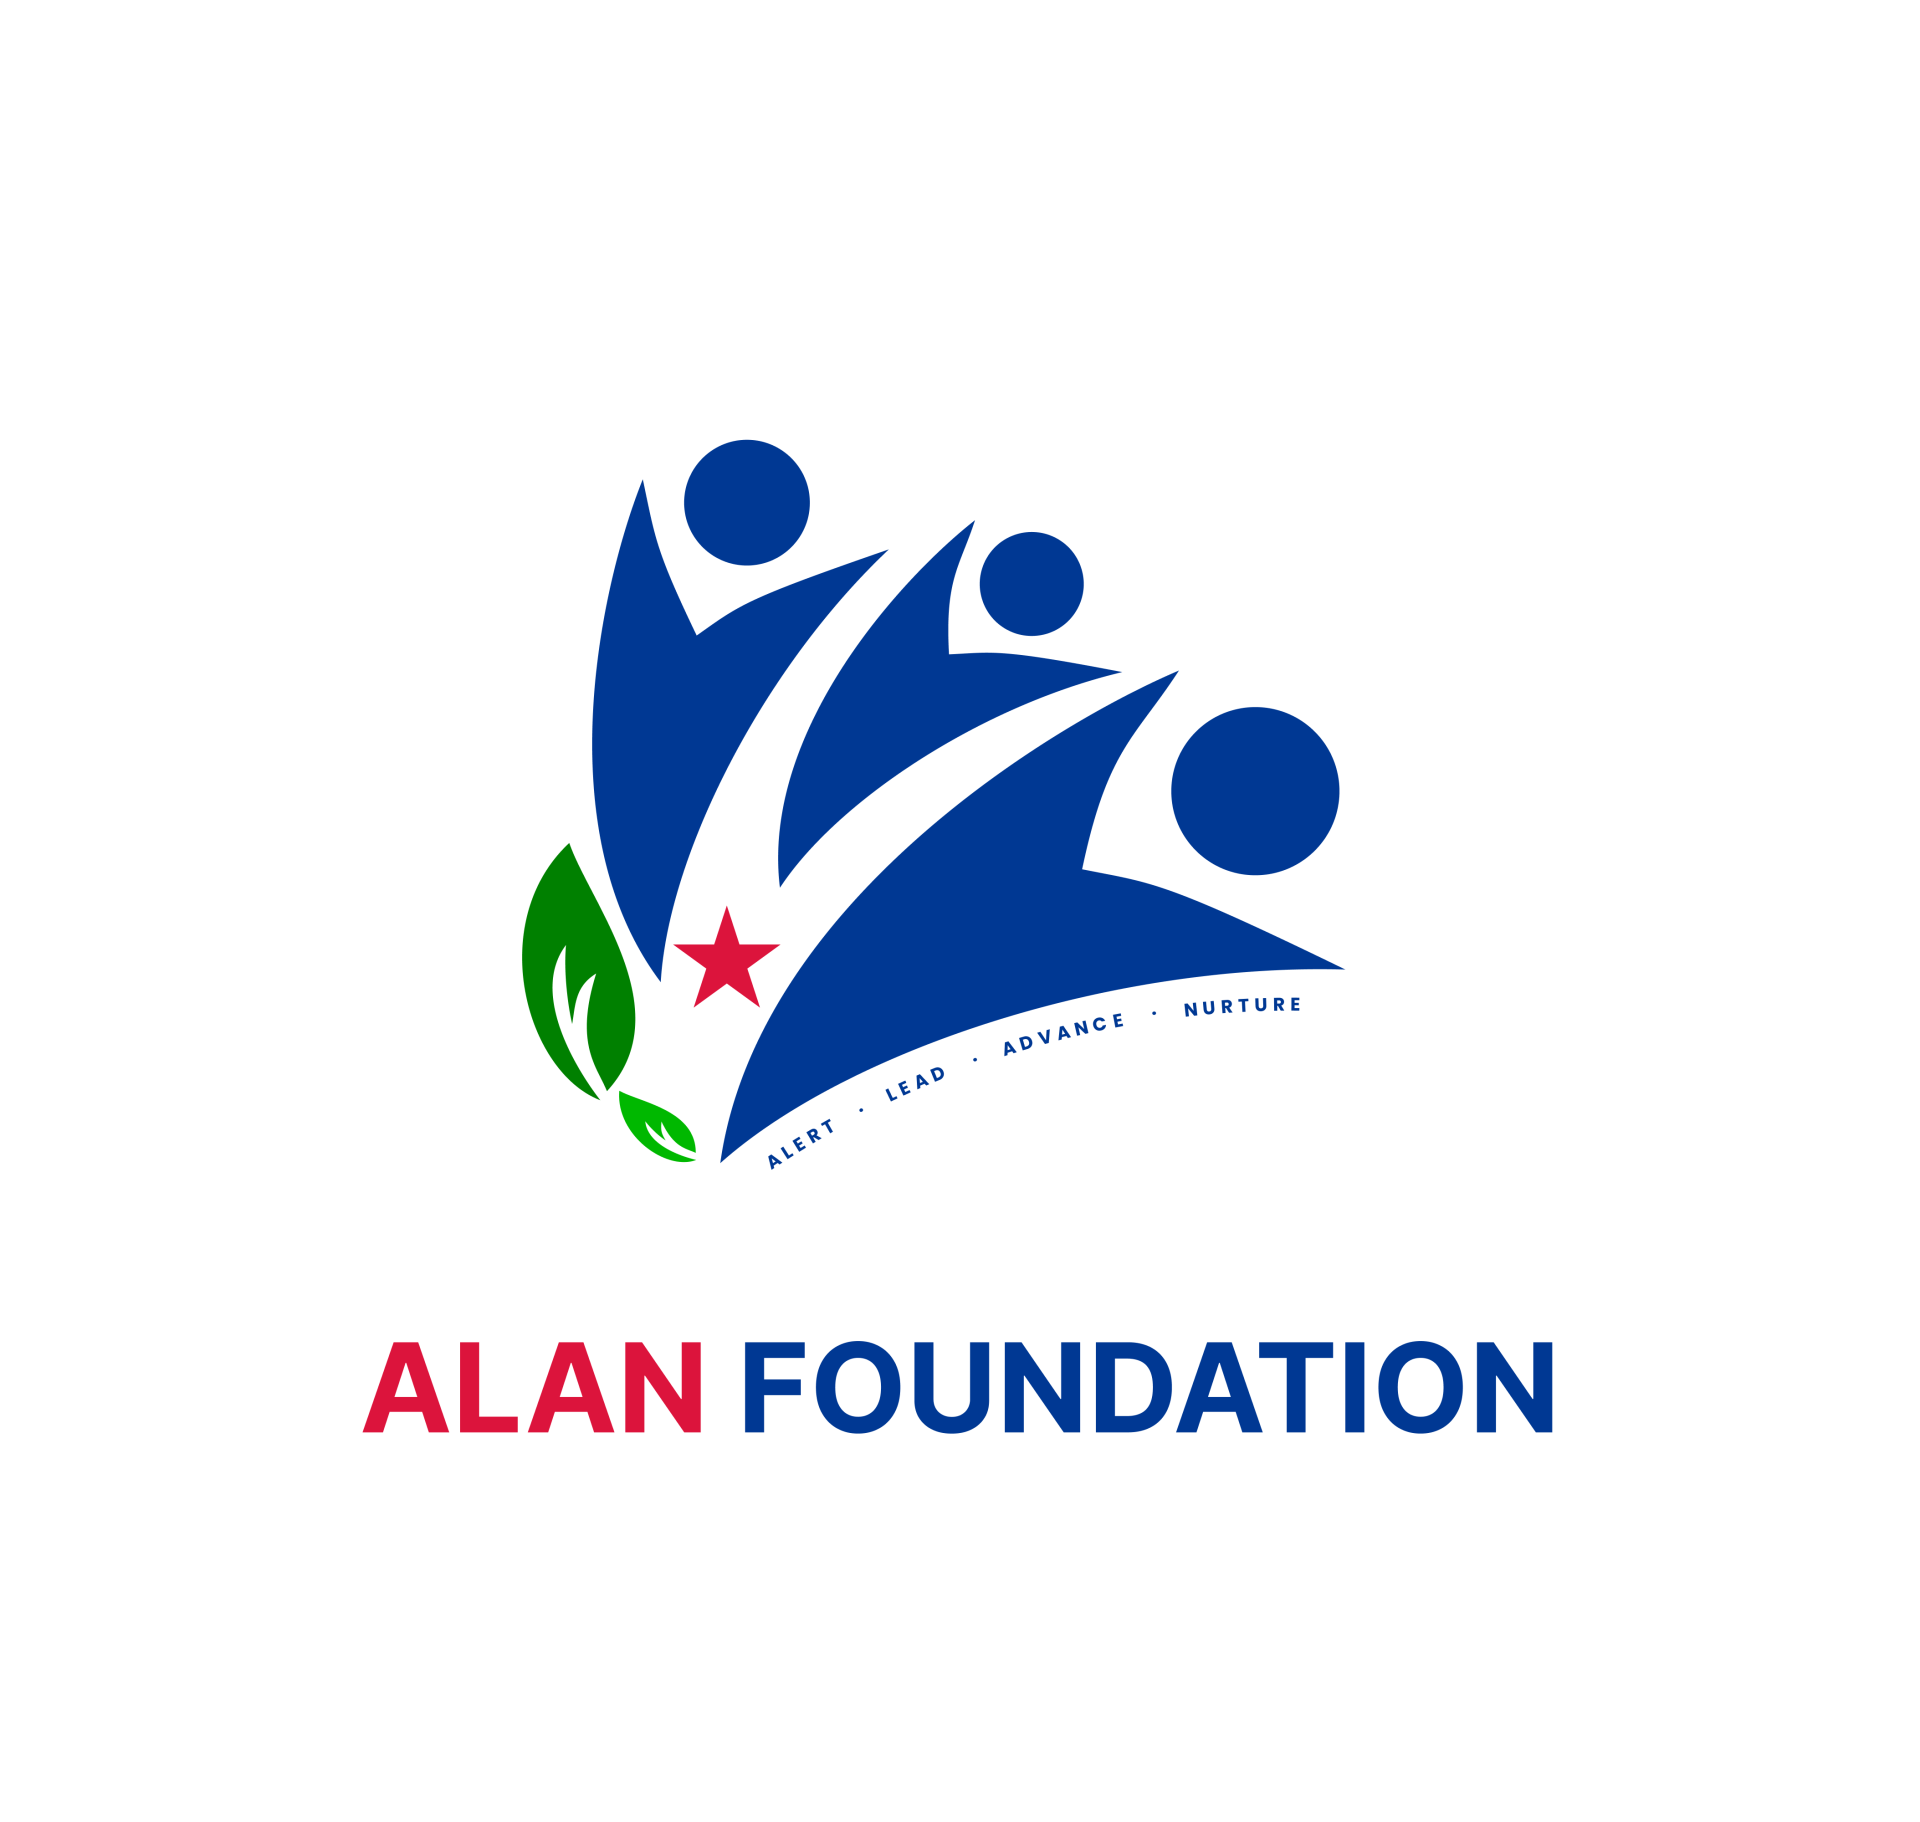 Alan Foundation